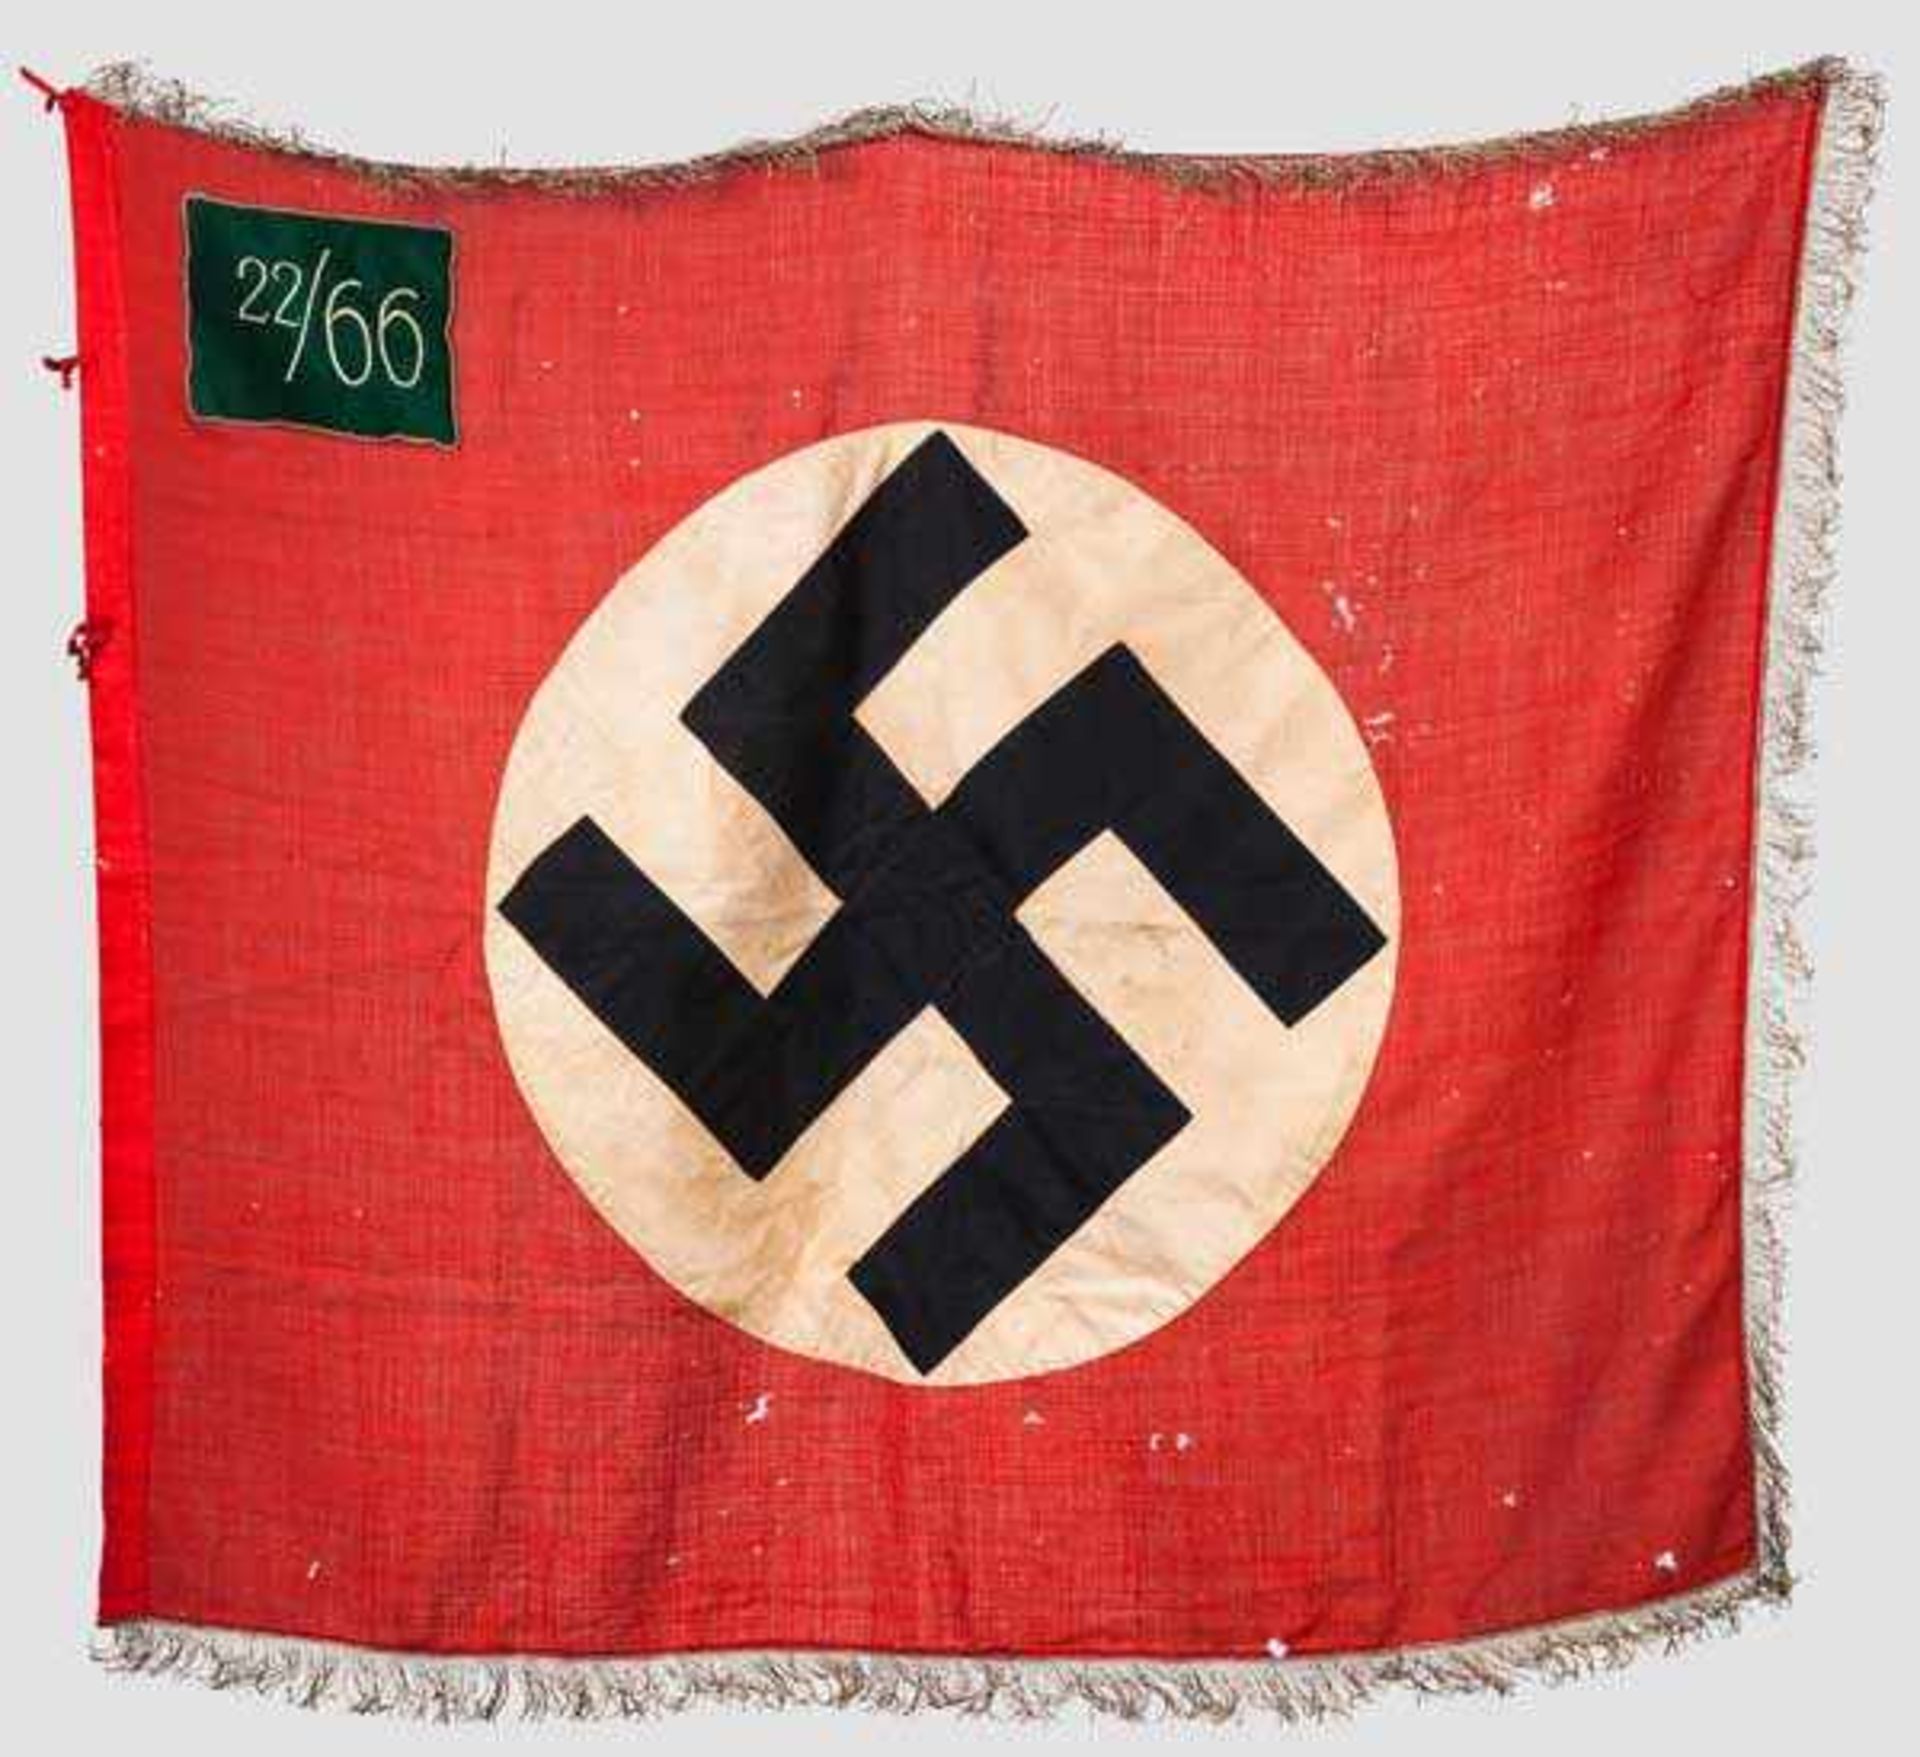 Fahne des SA-Sturmes 22/66 (Münster) Rotes Fahnenleinen mit dreiseitigem silbernem Fransenbehang,